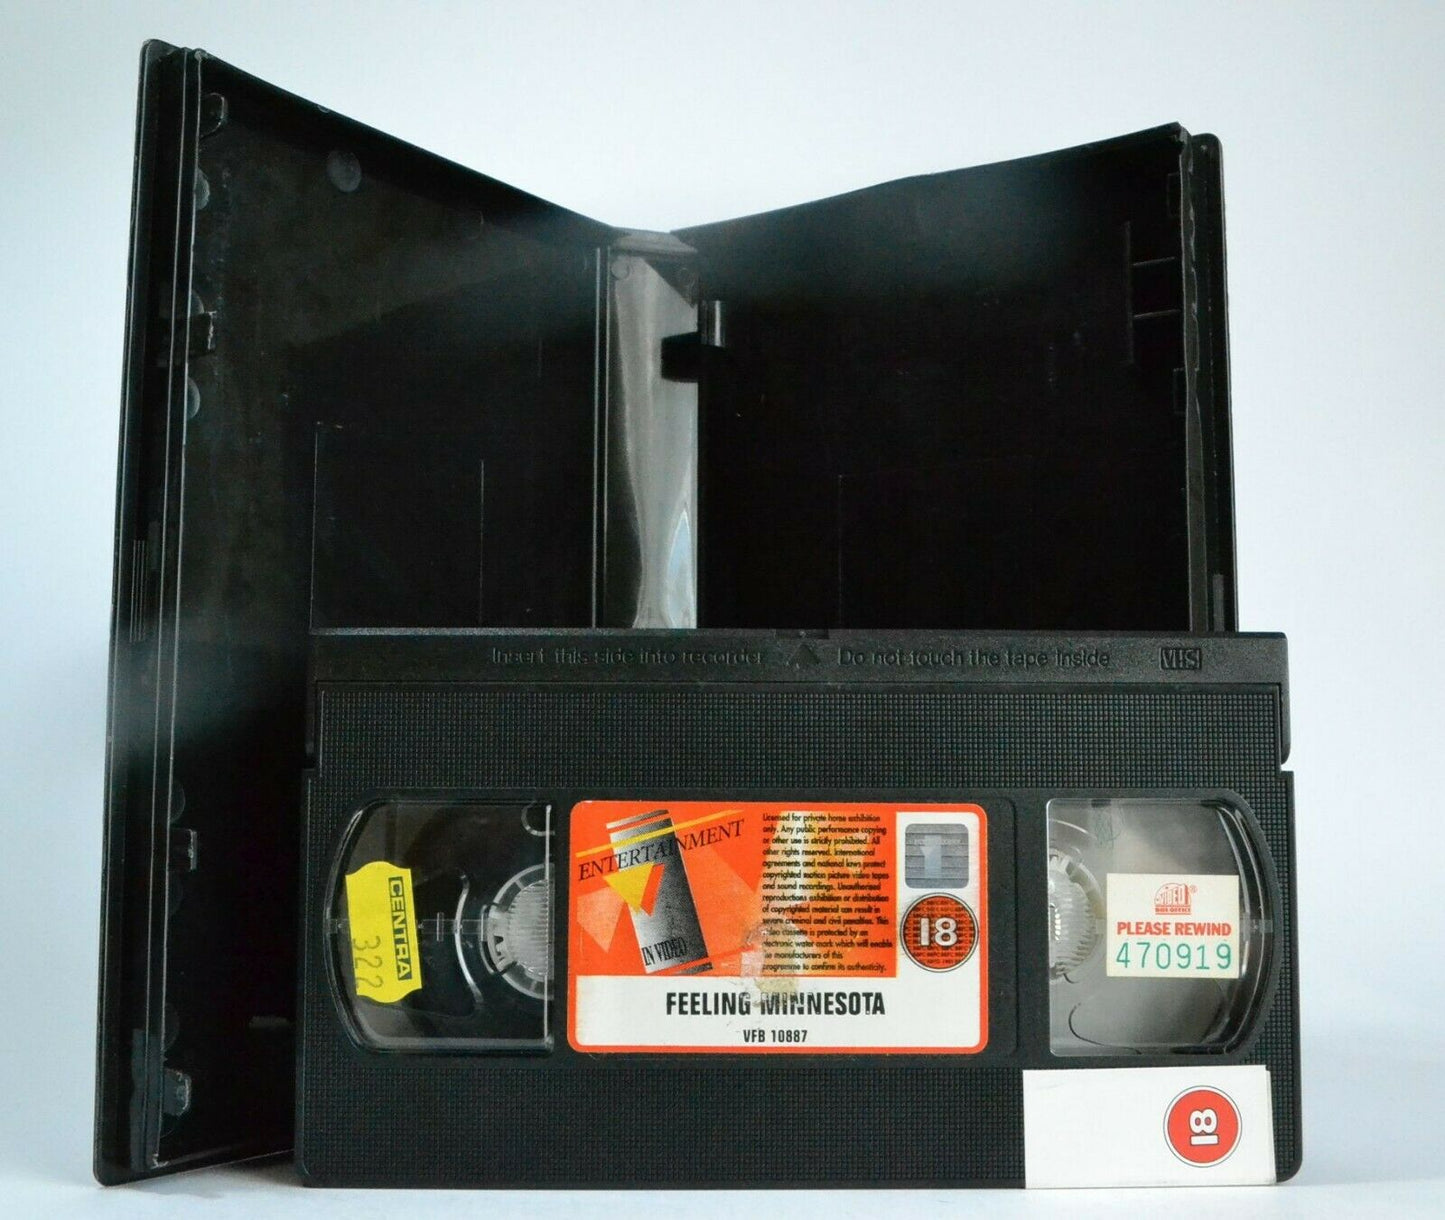 Feeling Minnesota: K.Reeves/C.Diaz - Comedy/Drama (1996) - Large Box - Pal VHS-